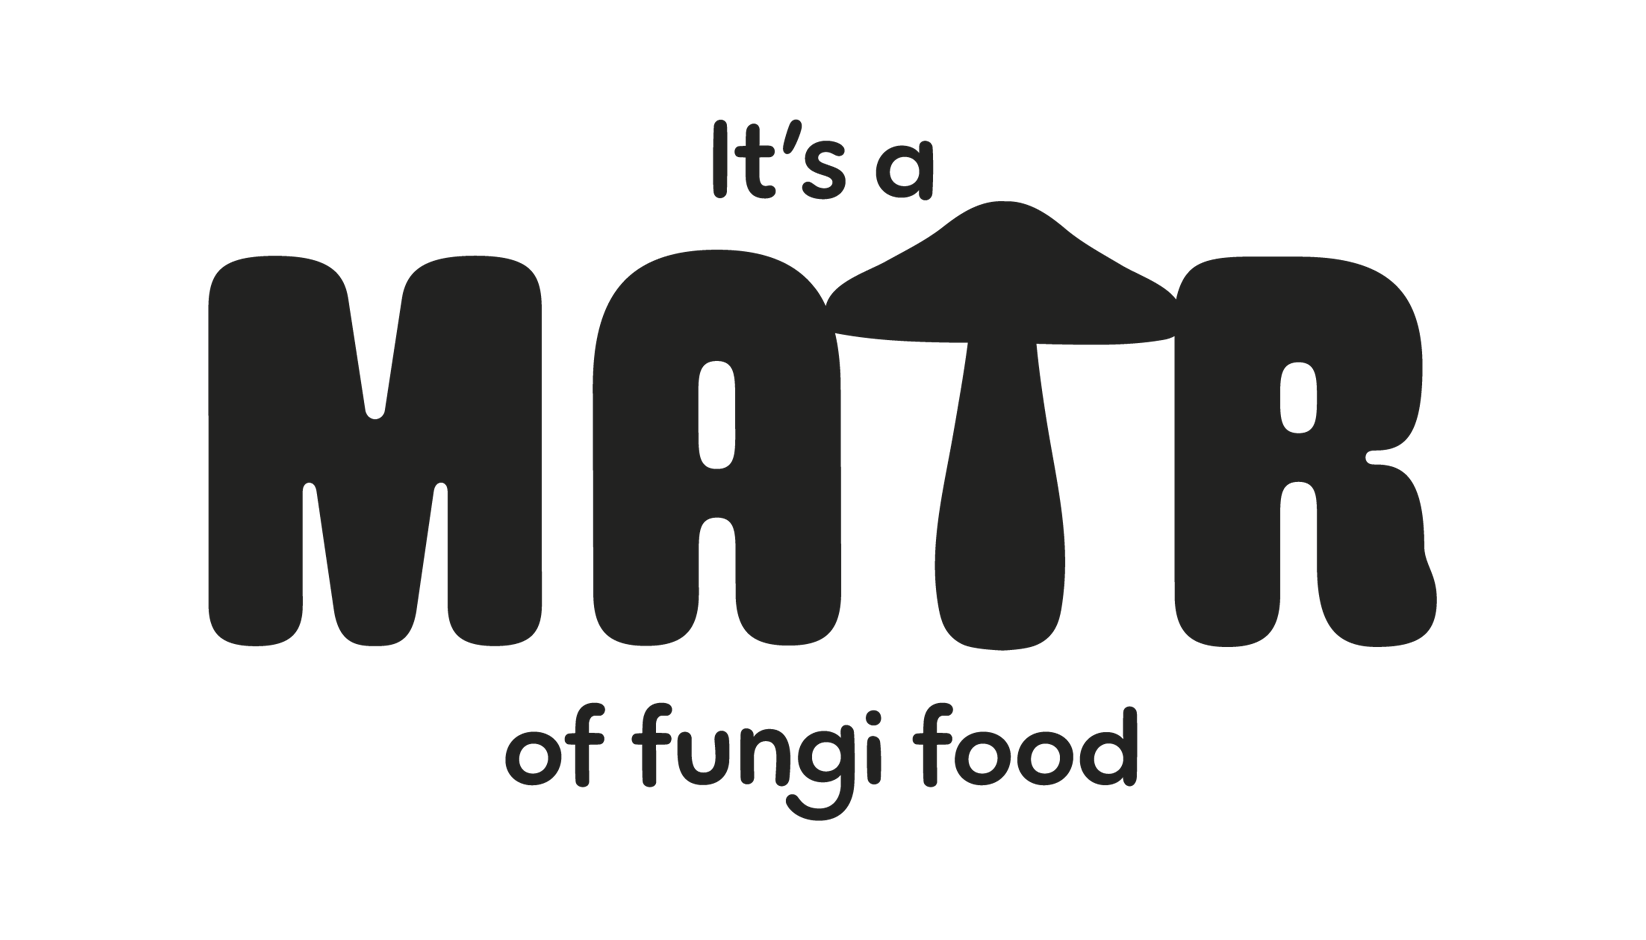 Matr Foods